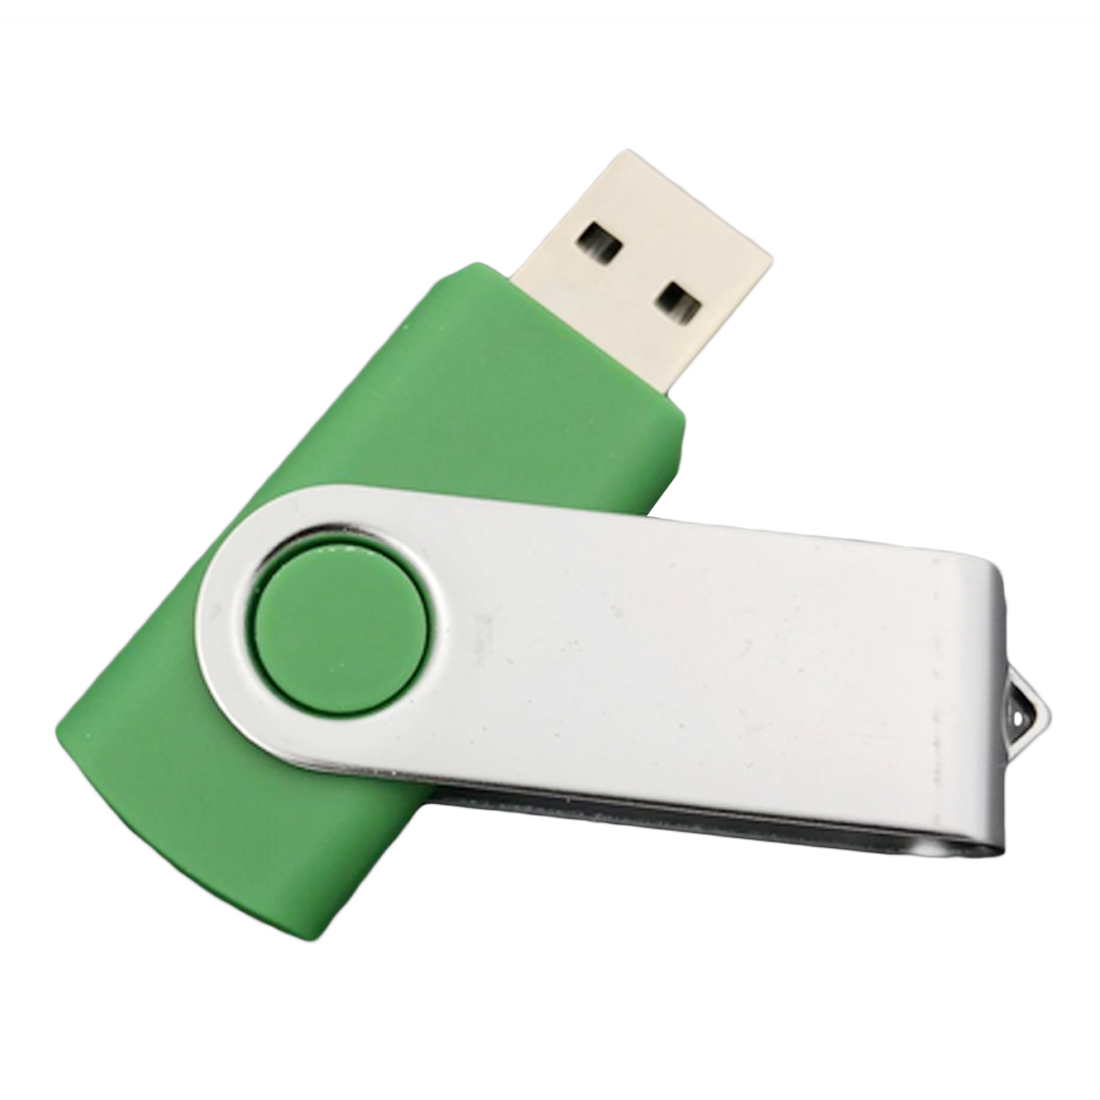 USB Flash Drive Rotate Pen Drive 4g 8g 16g 32g Micro usb Memory Storage Devices U disk